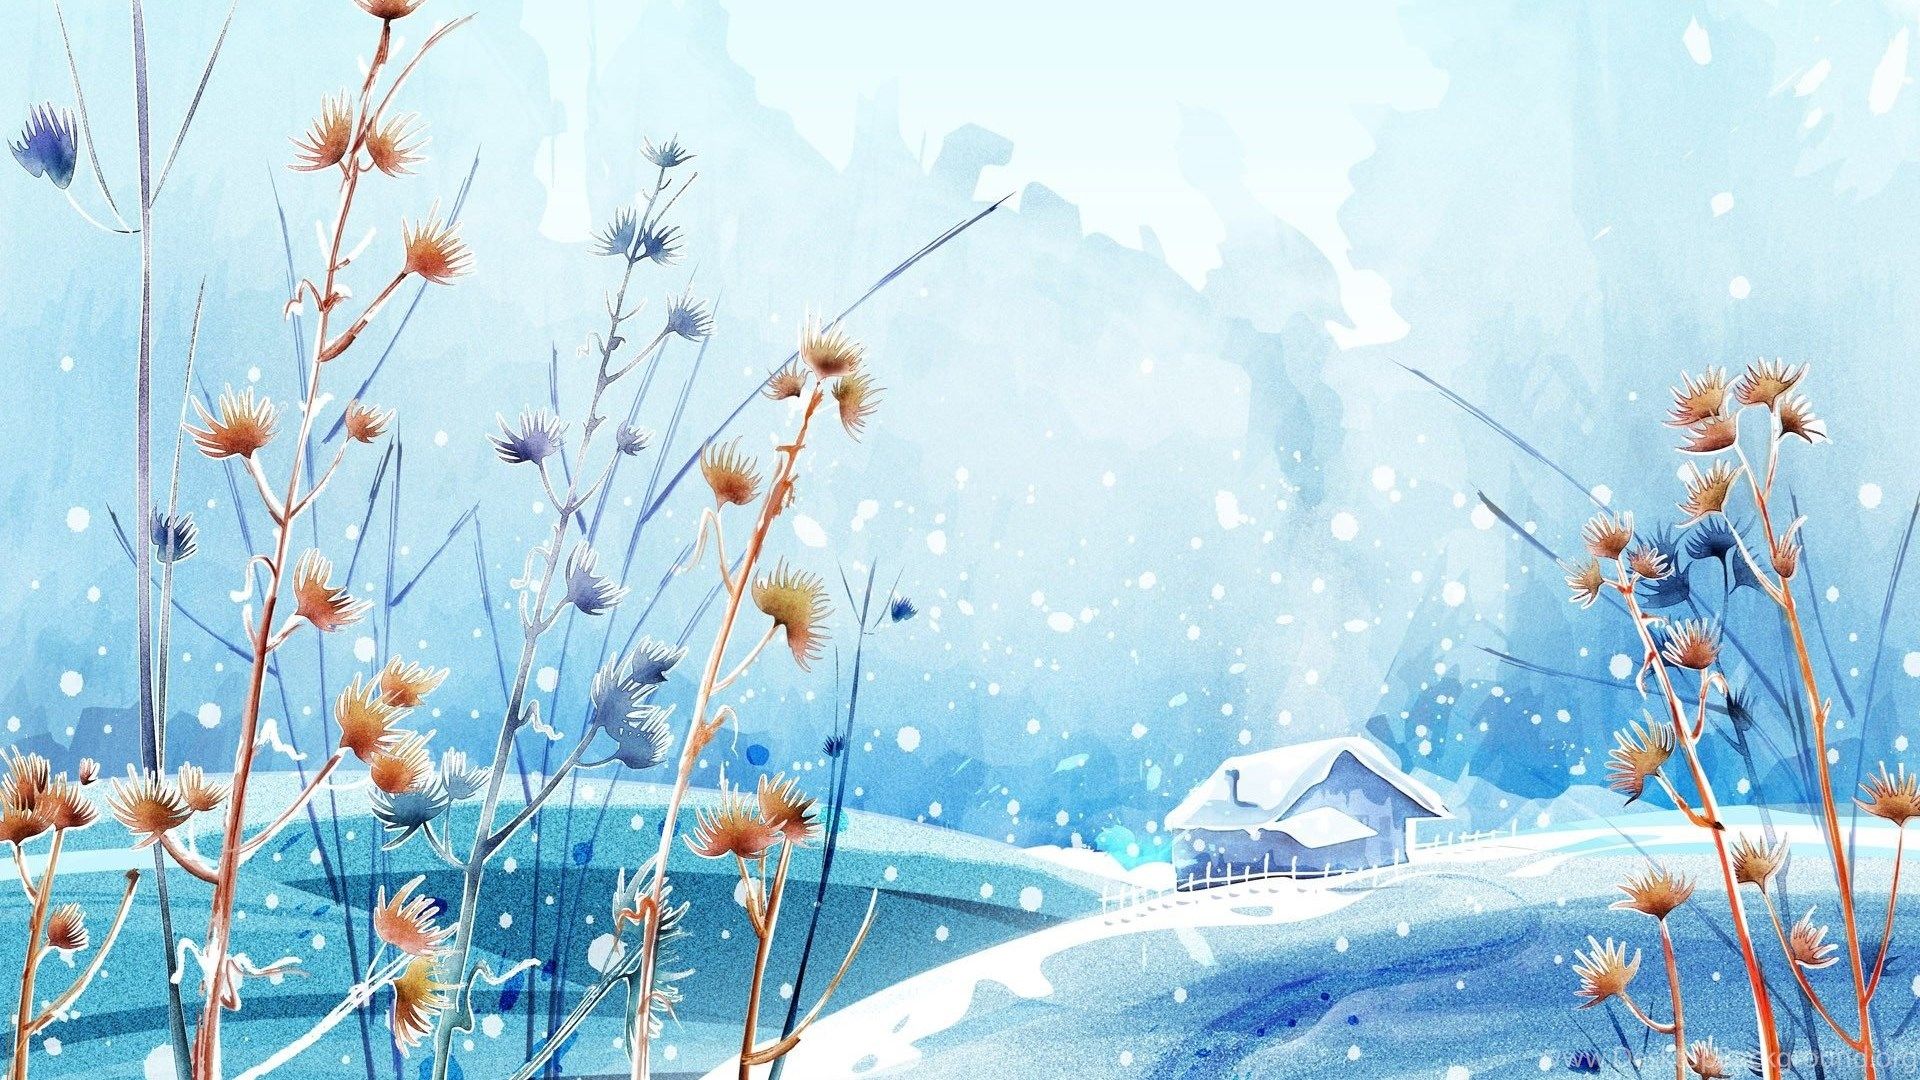 Winter Snow Landscape Painting Wallpaper HD For Desktop Desktop Background